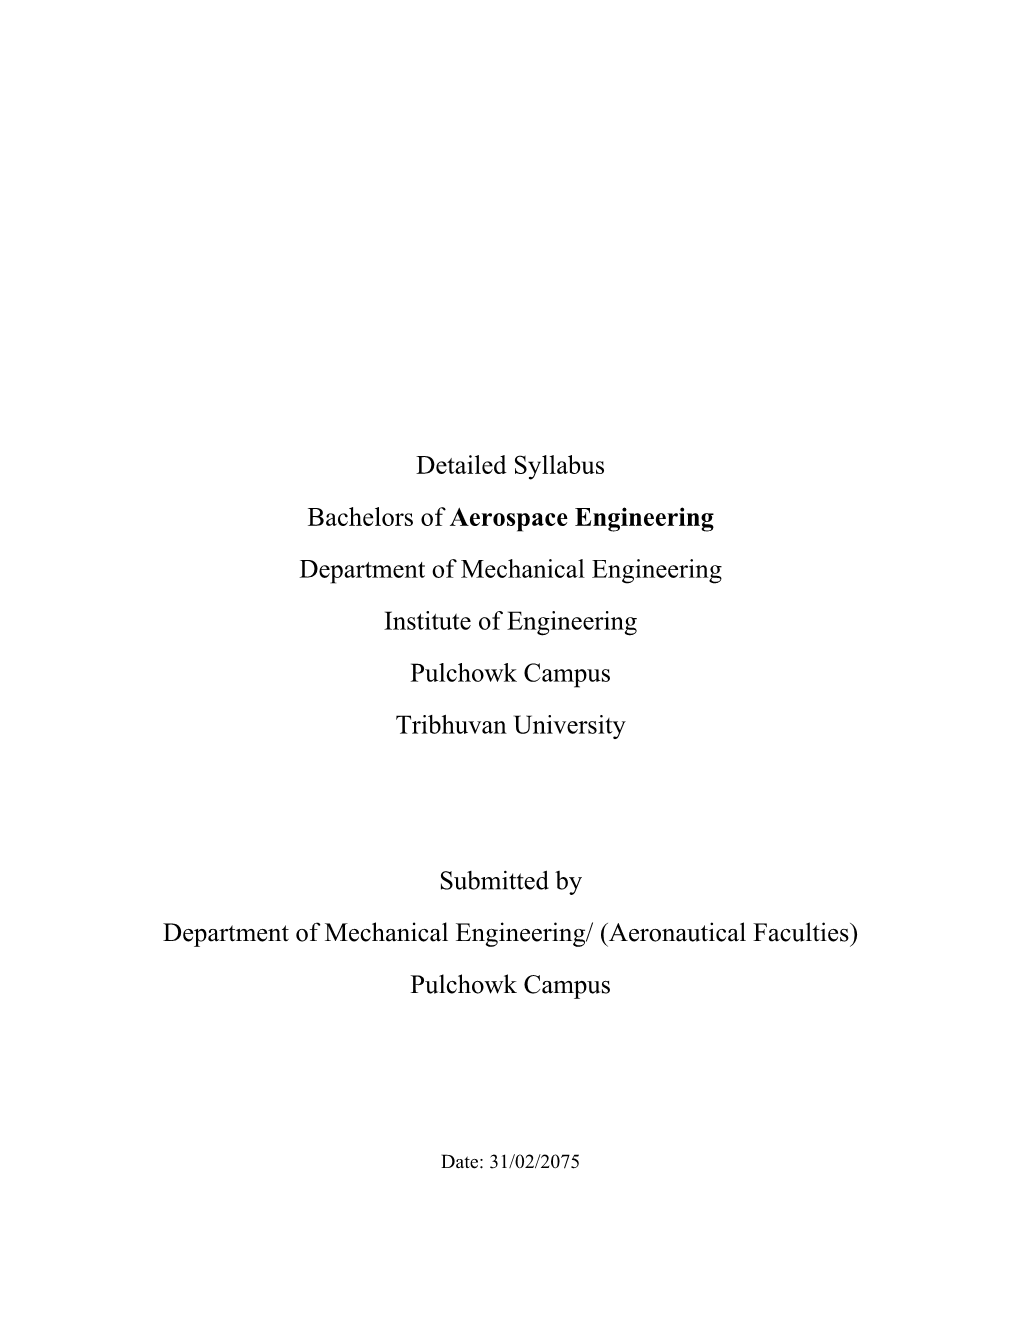 Aerospace Engineering Department of Mechanical Engineering Institute of Engineering Pulchowk Campus Tribhuvan University